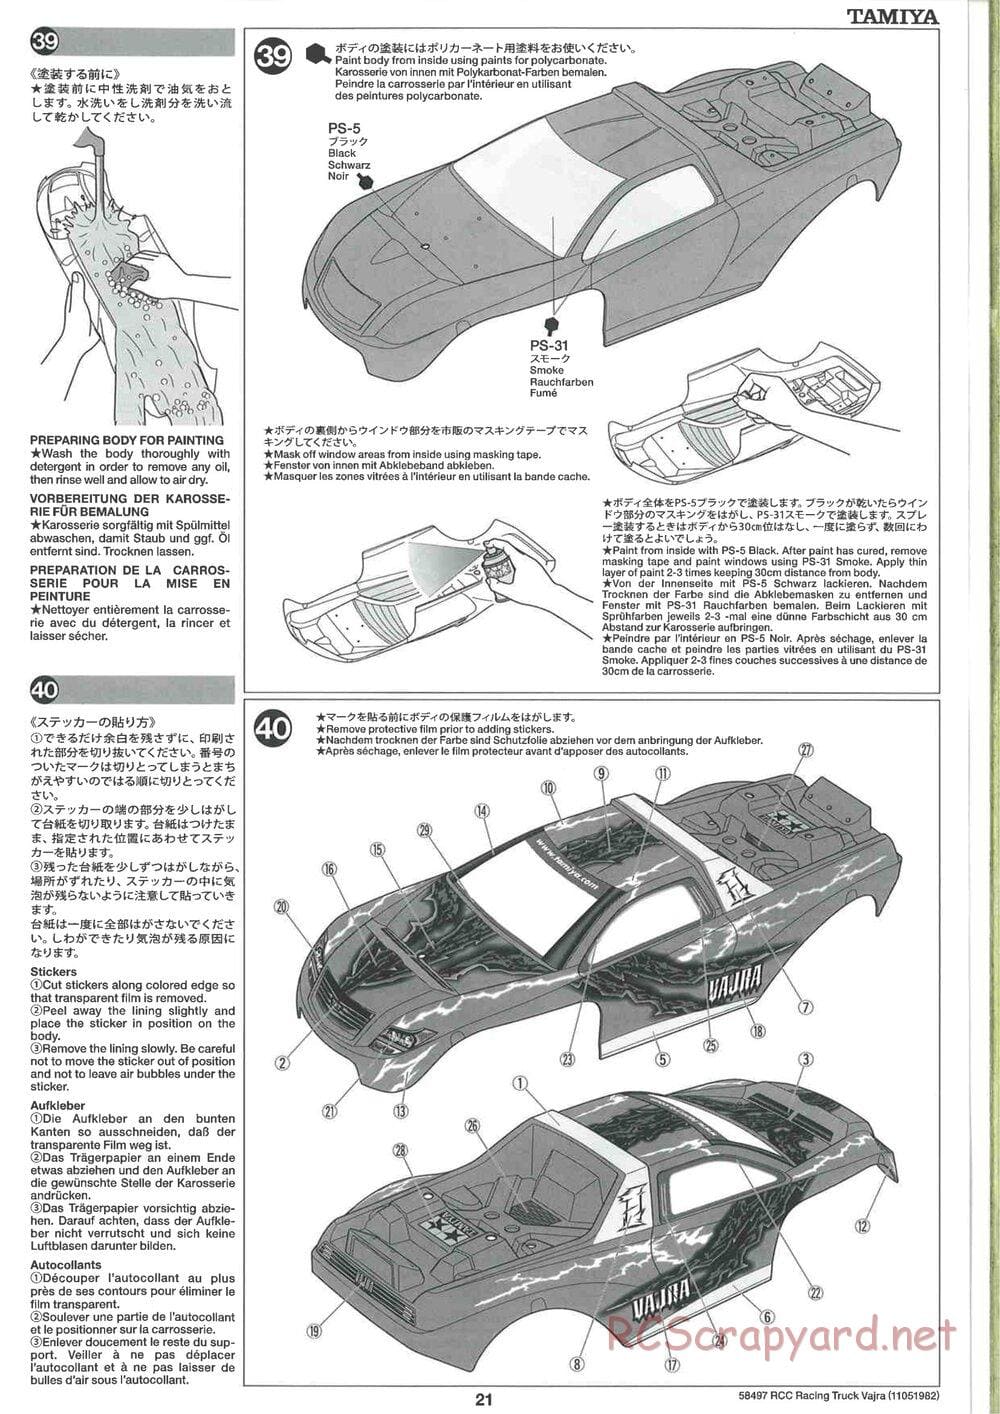 Tamiya - Vajra - AV Chassis - Manual - Page 21